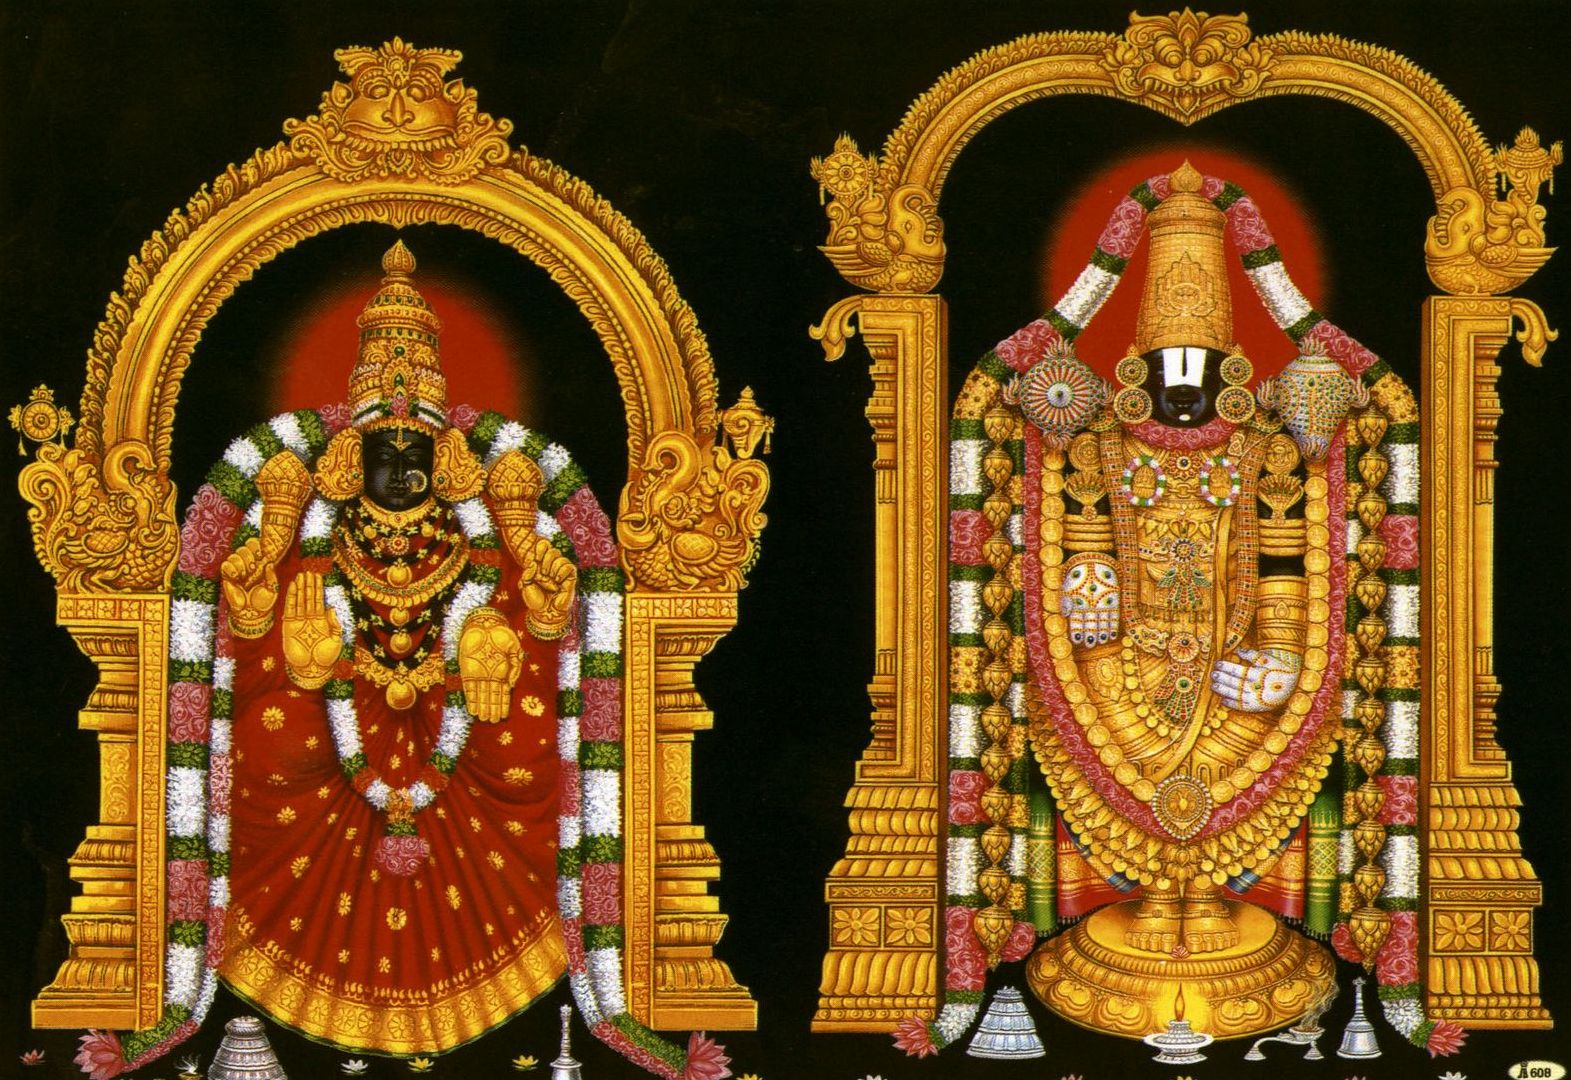 http://2.bp.blogspot.com/-IrEfbTULtQM/TbEGJvaIUdI/AAAAAAAAAXM/8HDdBPs_SUg/s1600/Tirupati-Balaji-hindu-temple-of-india-images-download.jpg